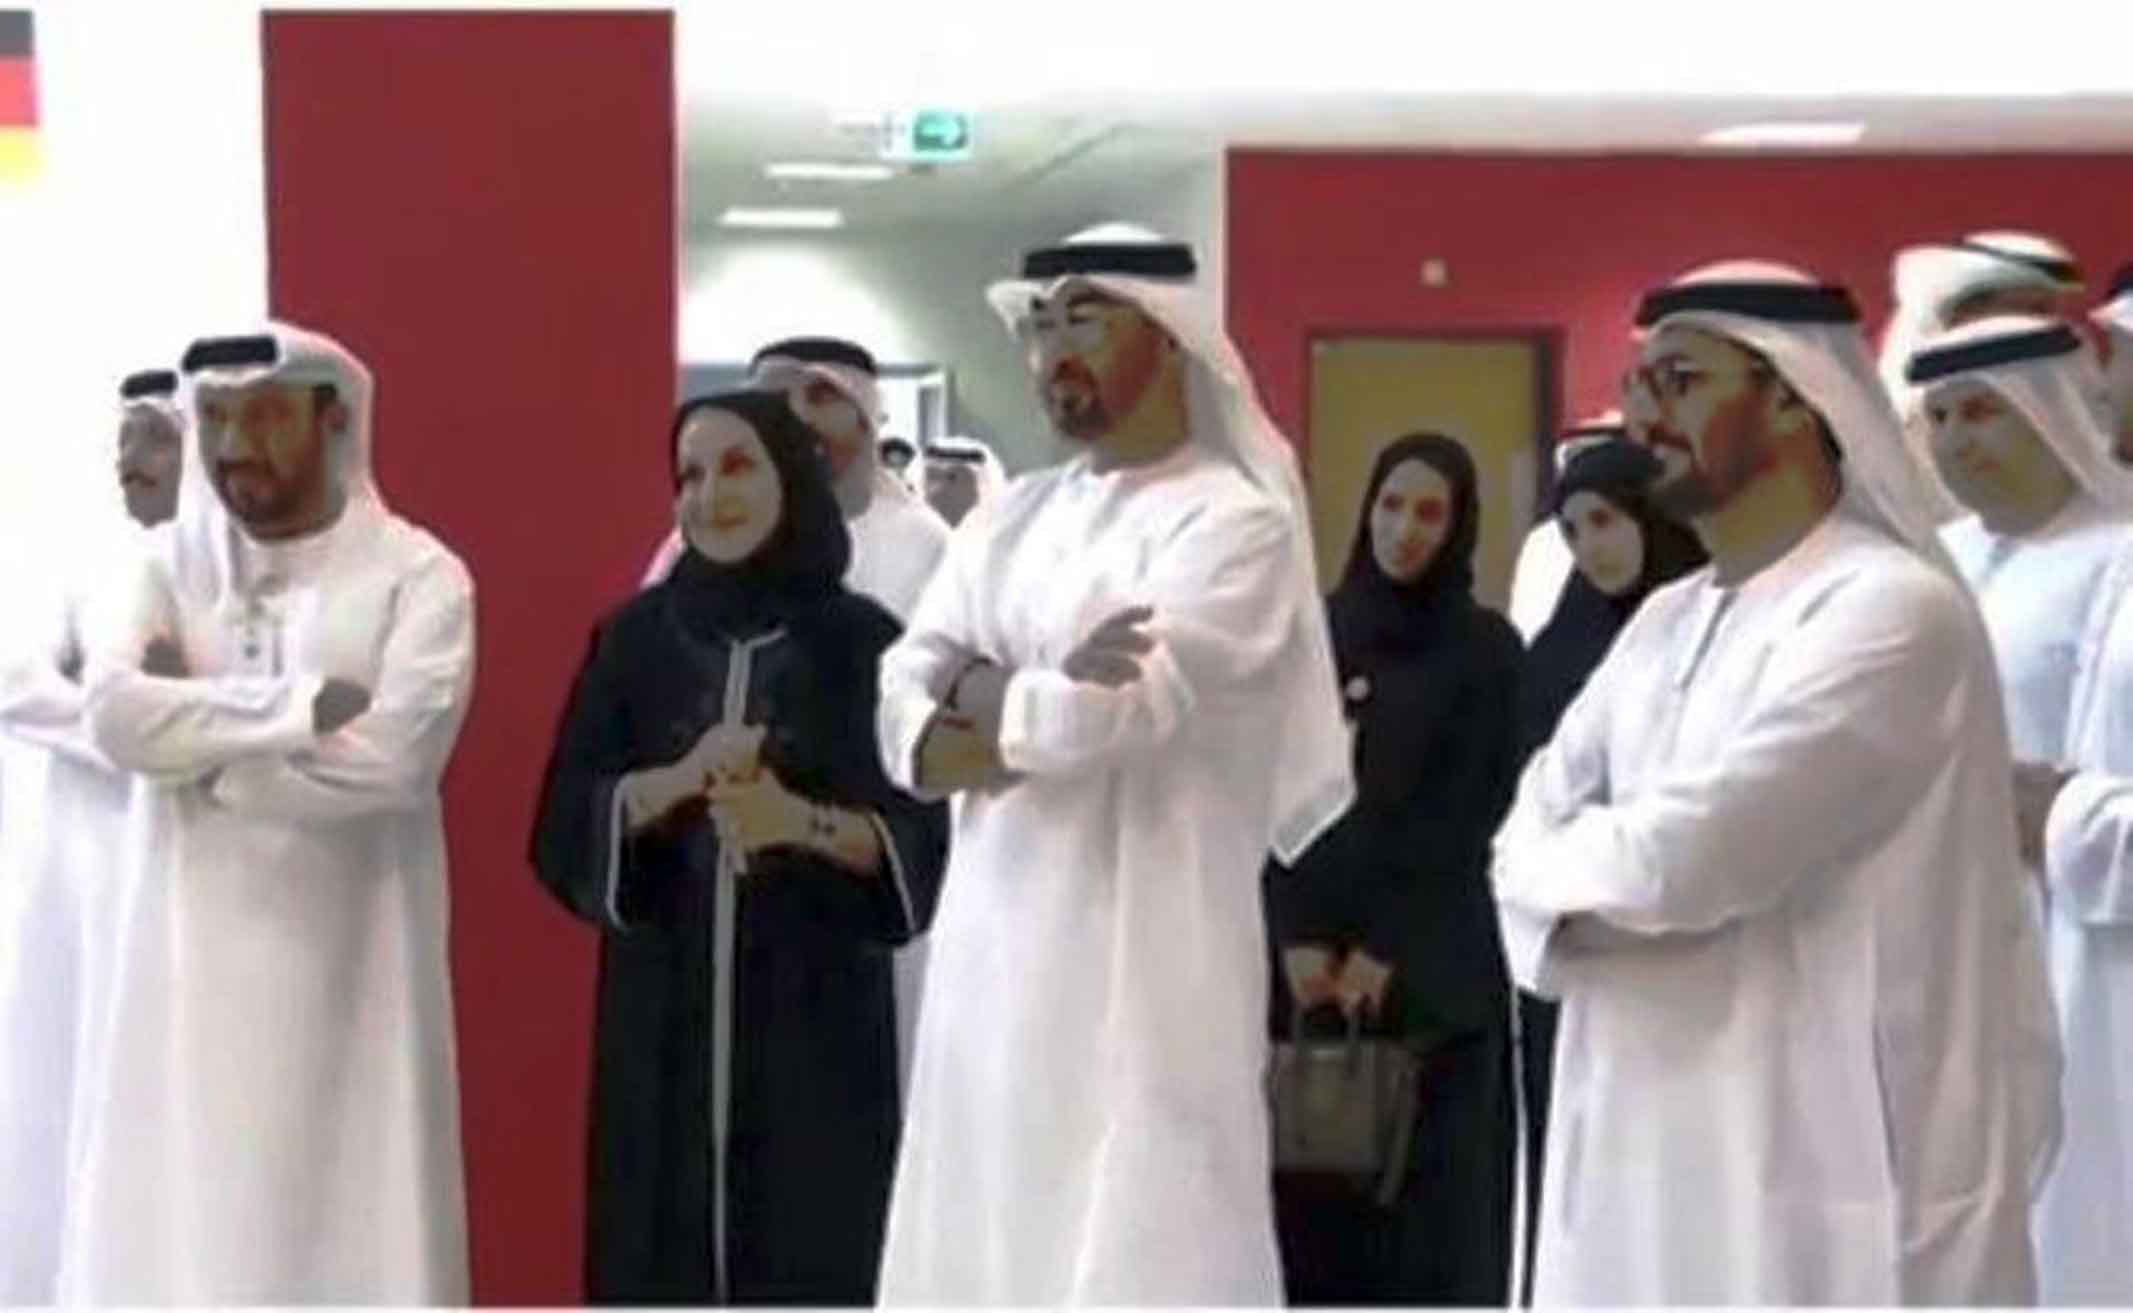 Sheikh Mohamed Bin Zayed Al Nahyan visit to school